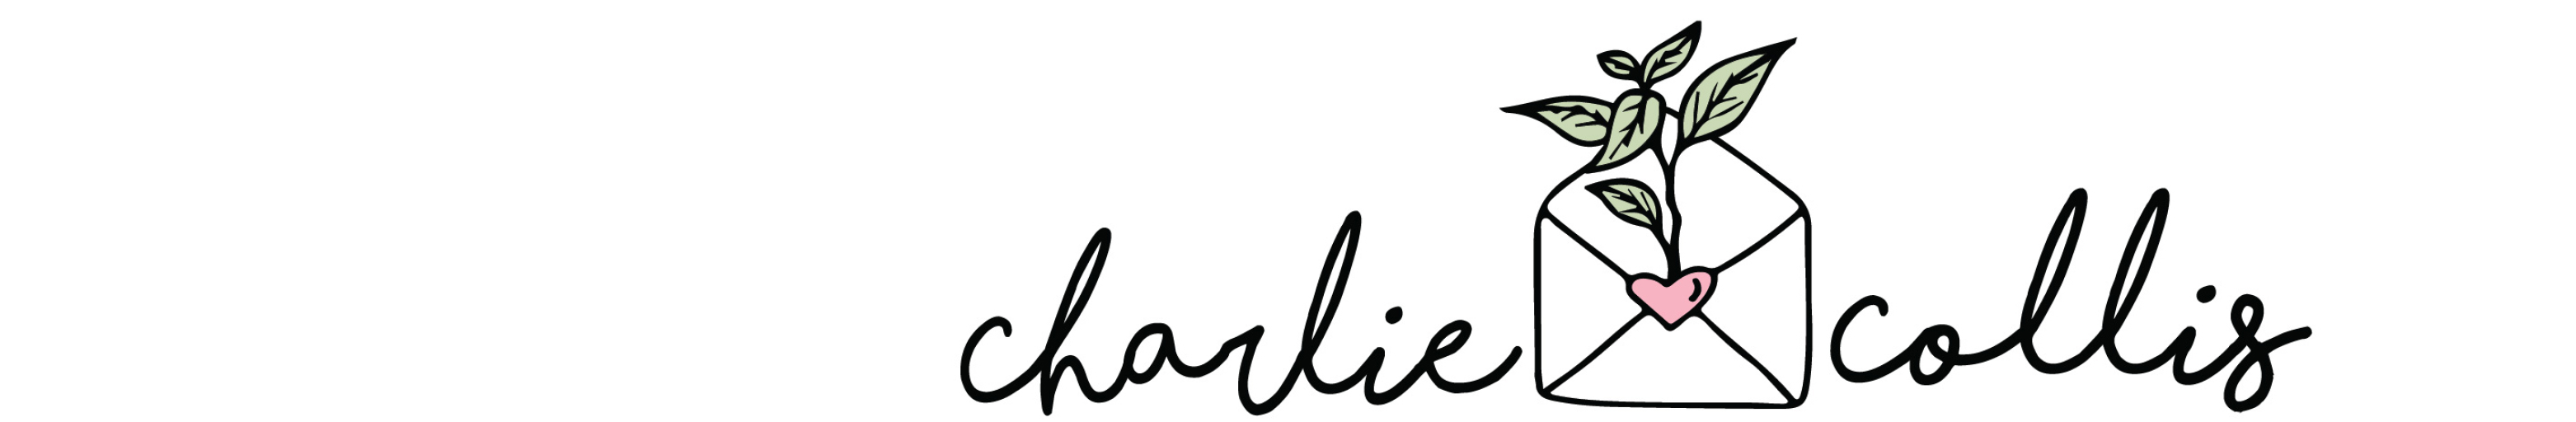 Charlie Collis's profile banner